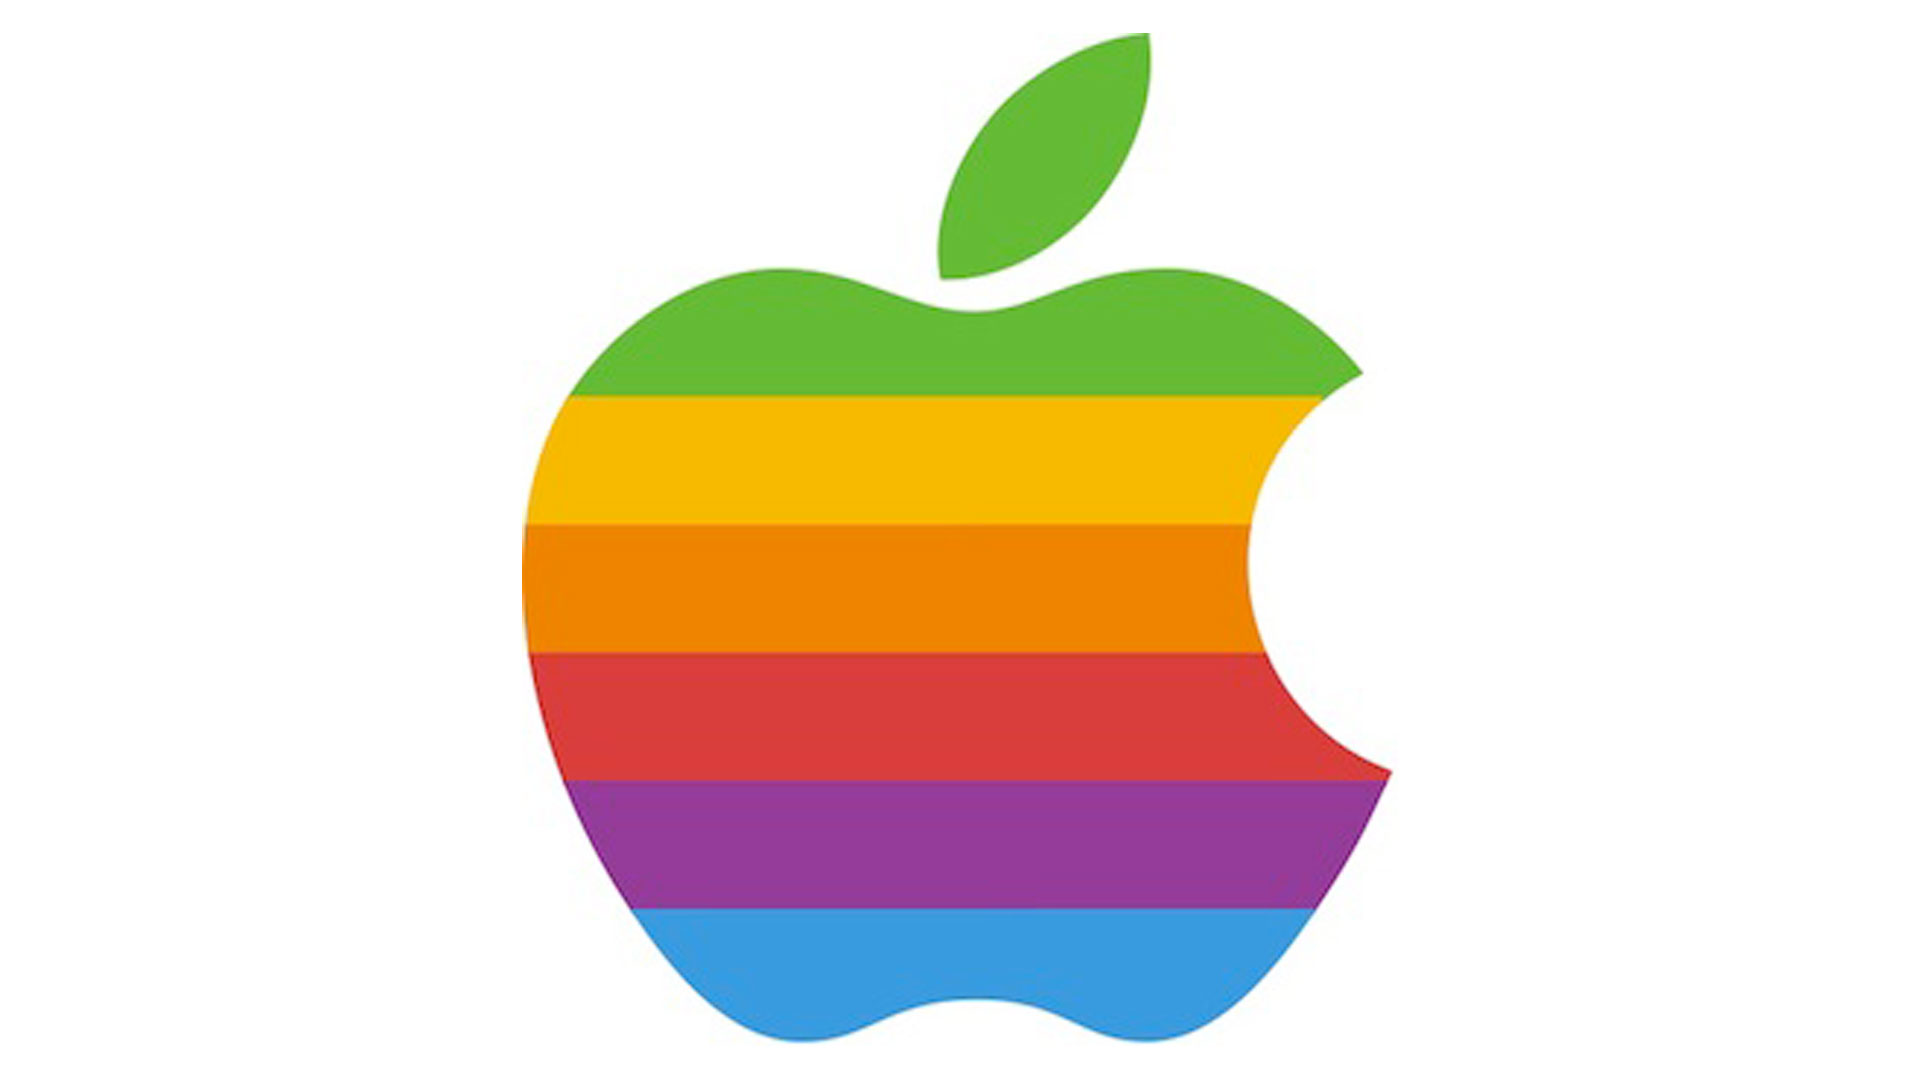 Details 48 en honor a quien es el logo de apple